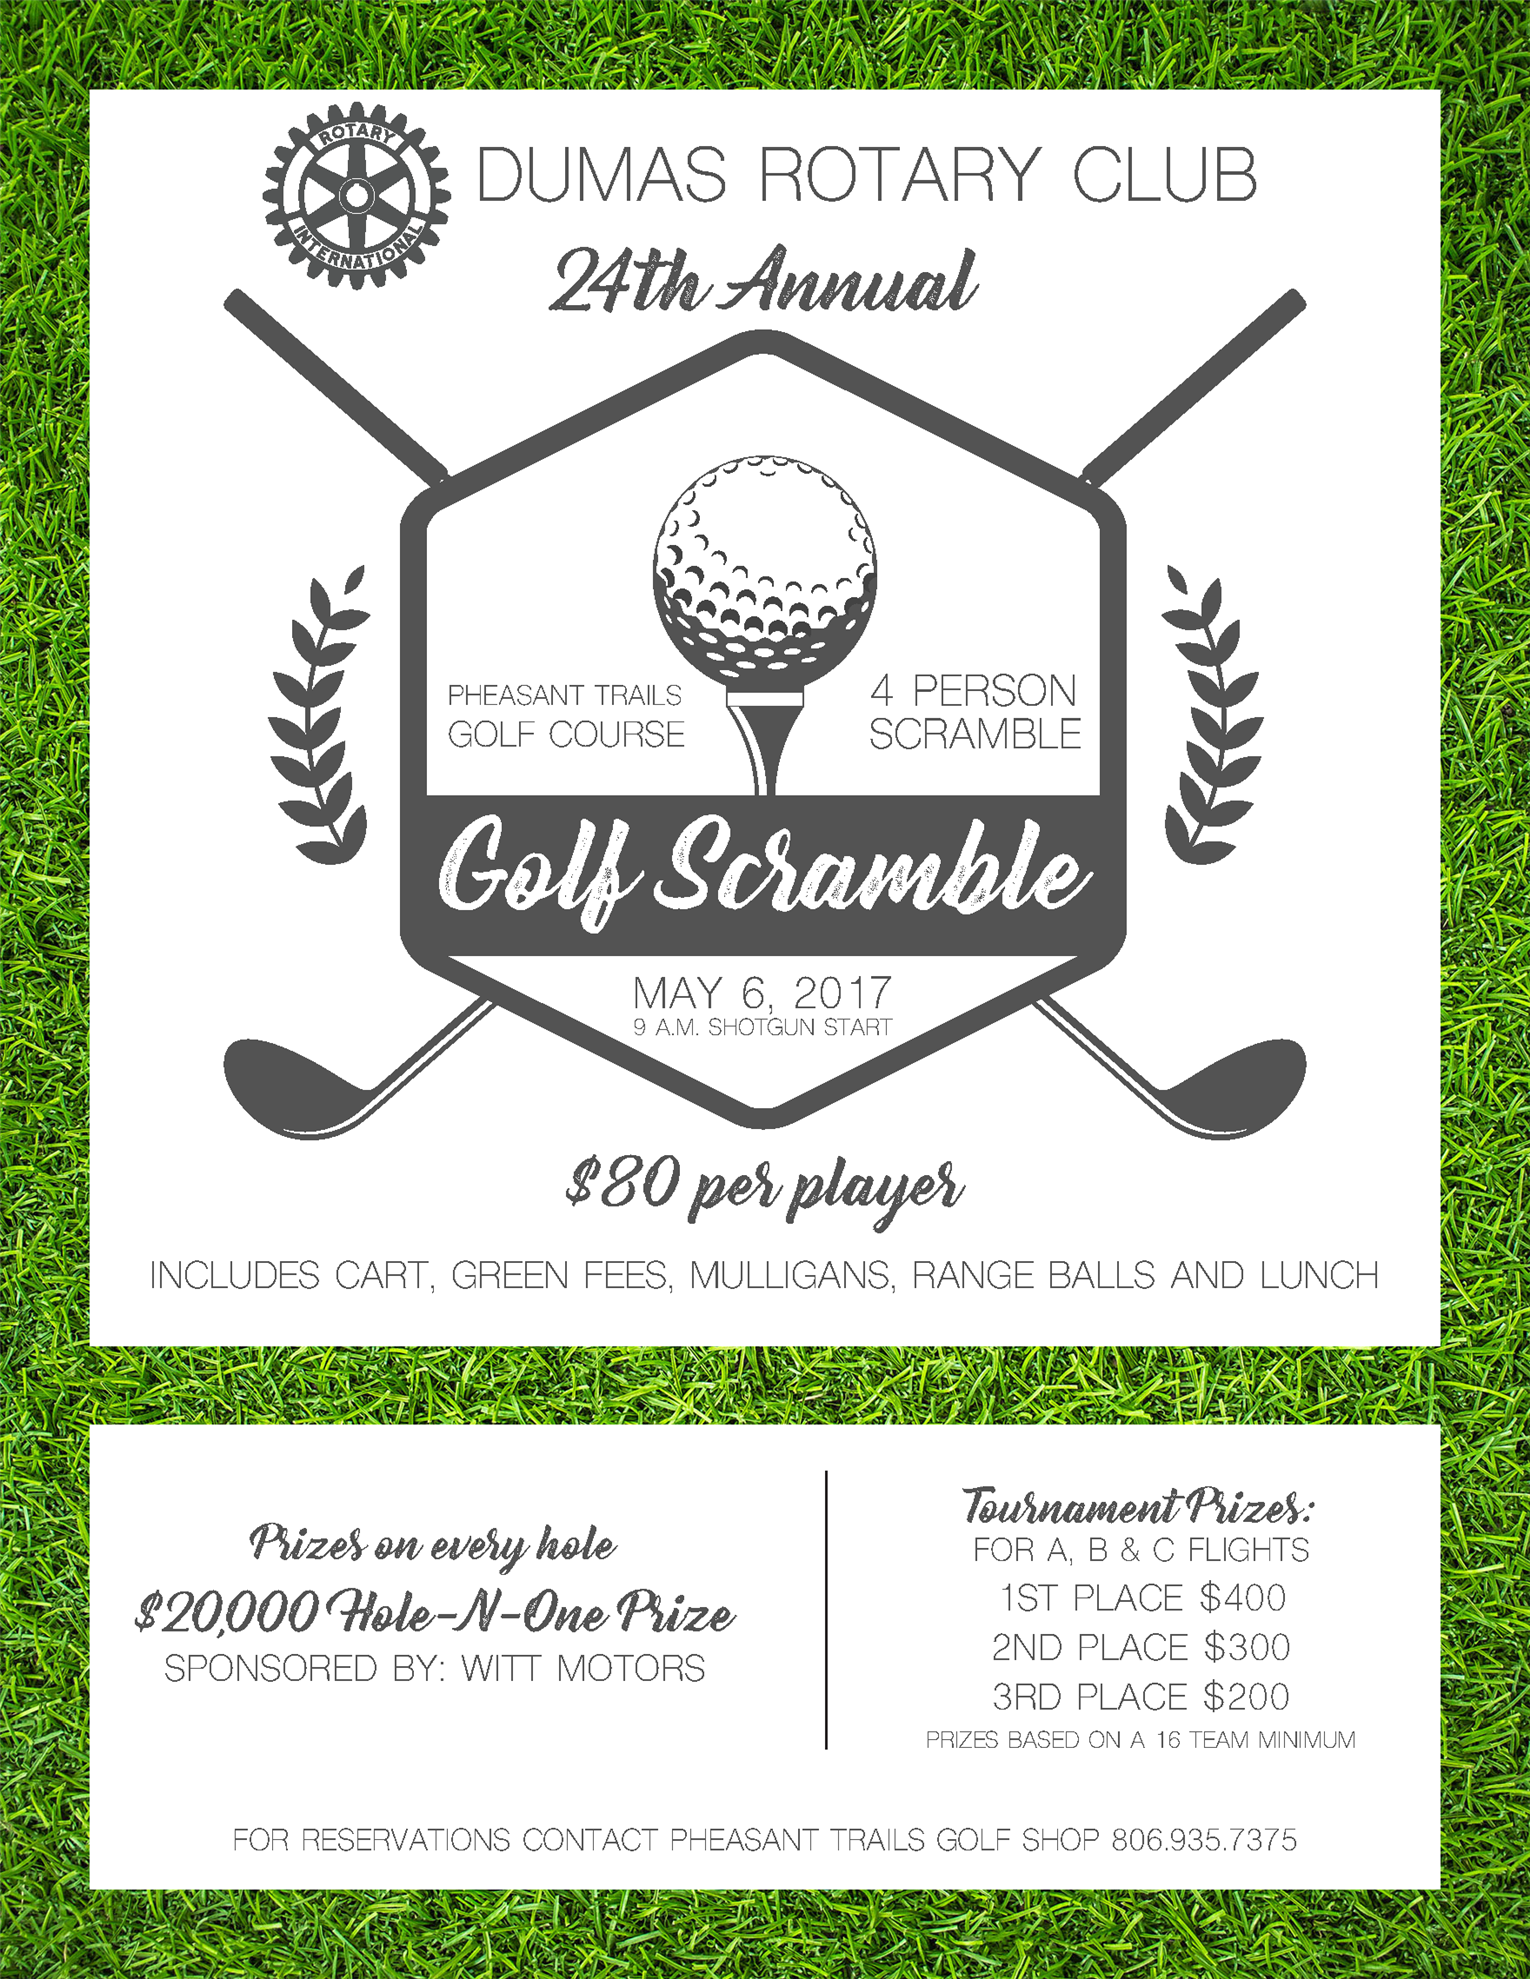 Golf Scramble - Dumas Rotary Club | Rotary District 5730